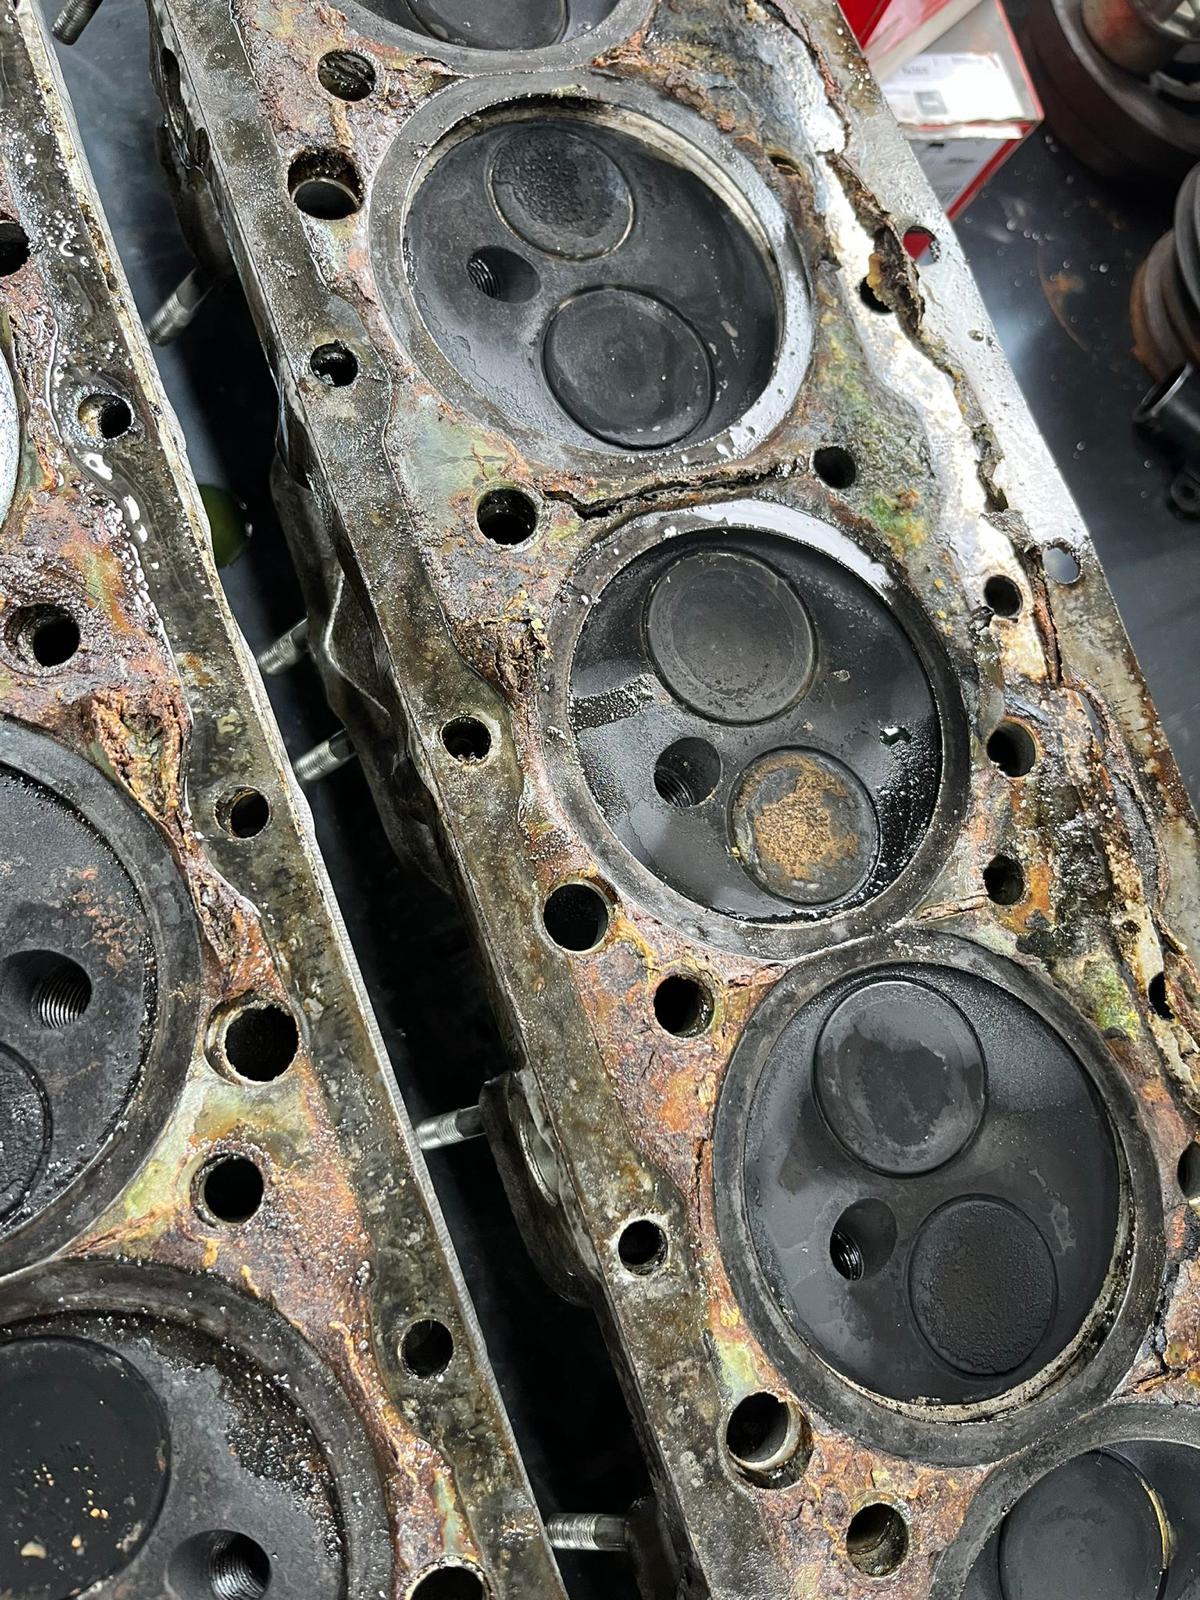 jaguar e-type V12 restaurierung restauration motor